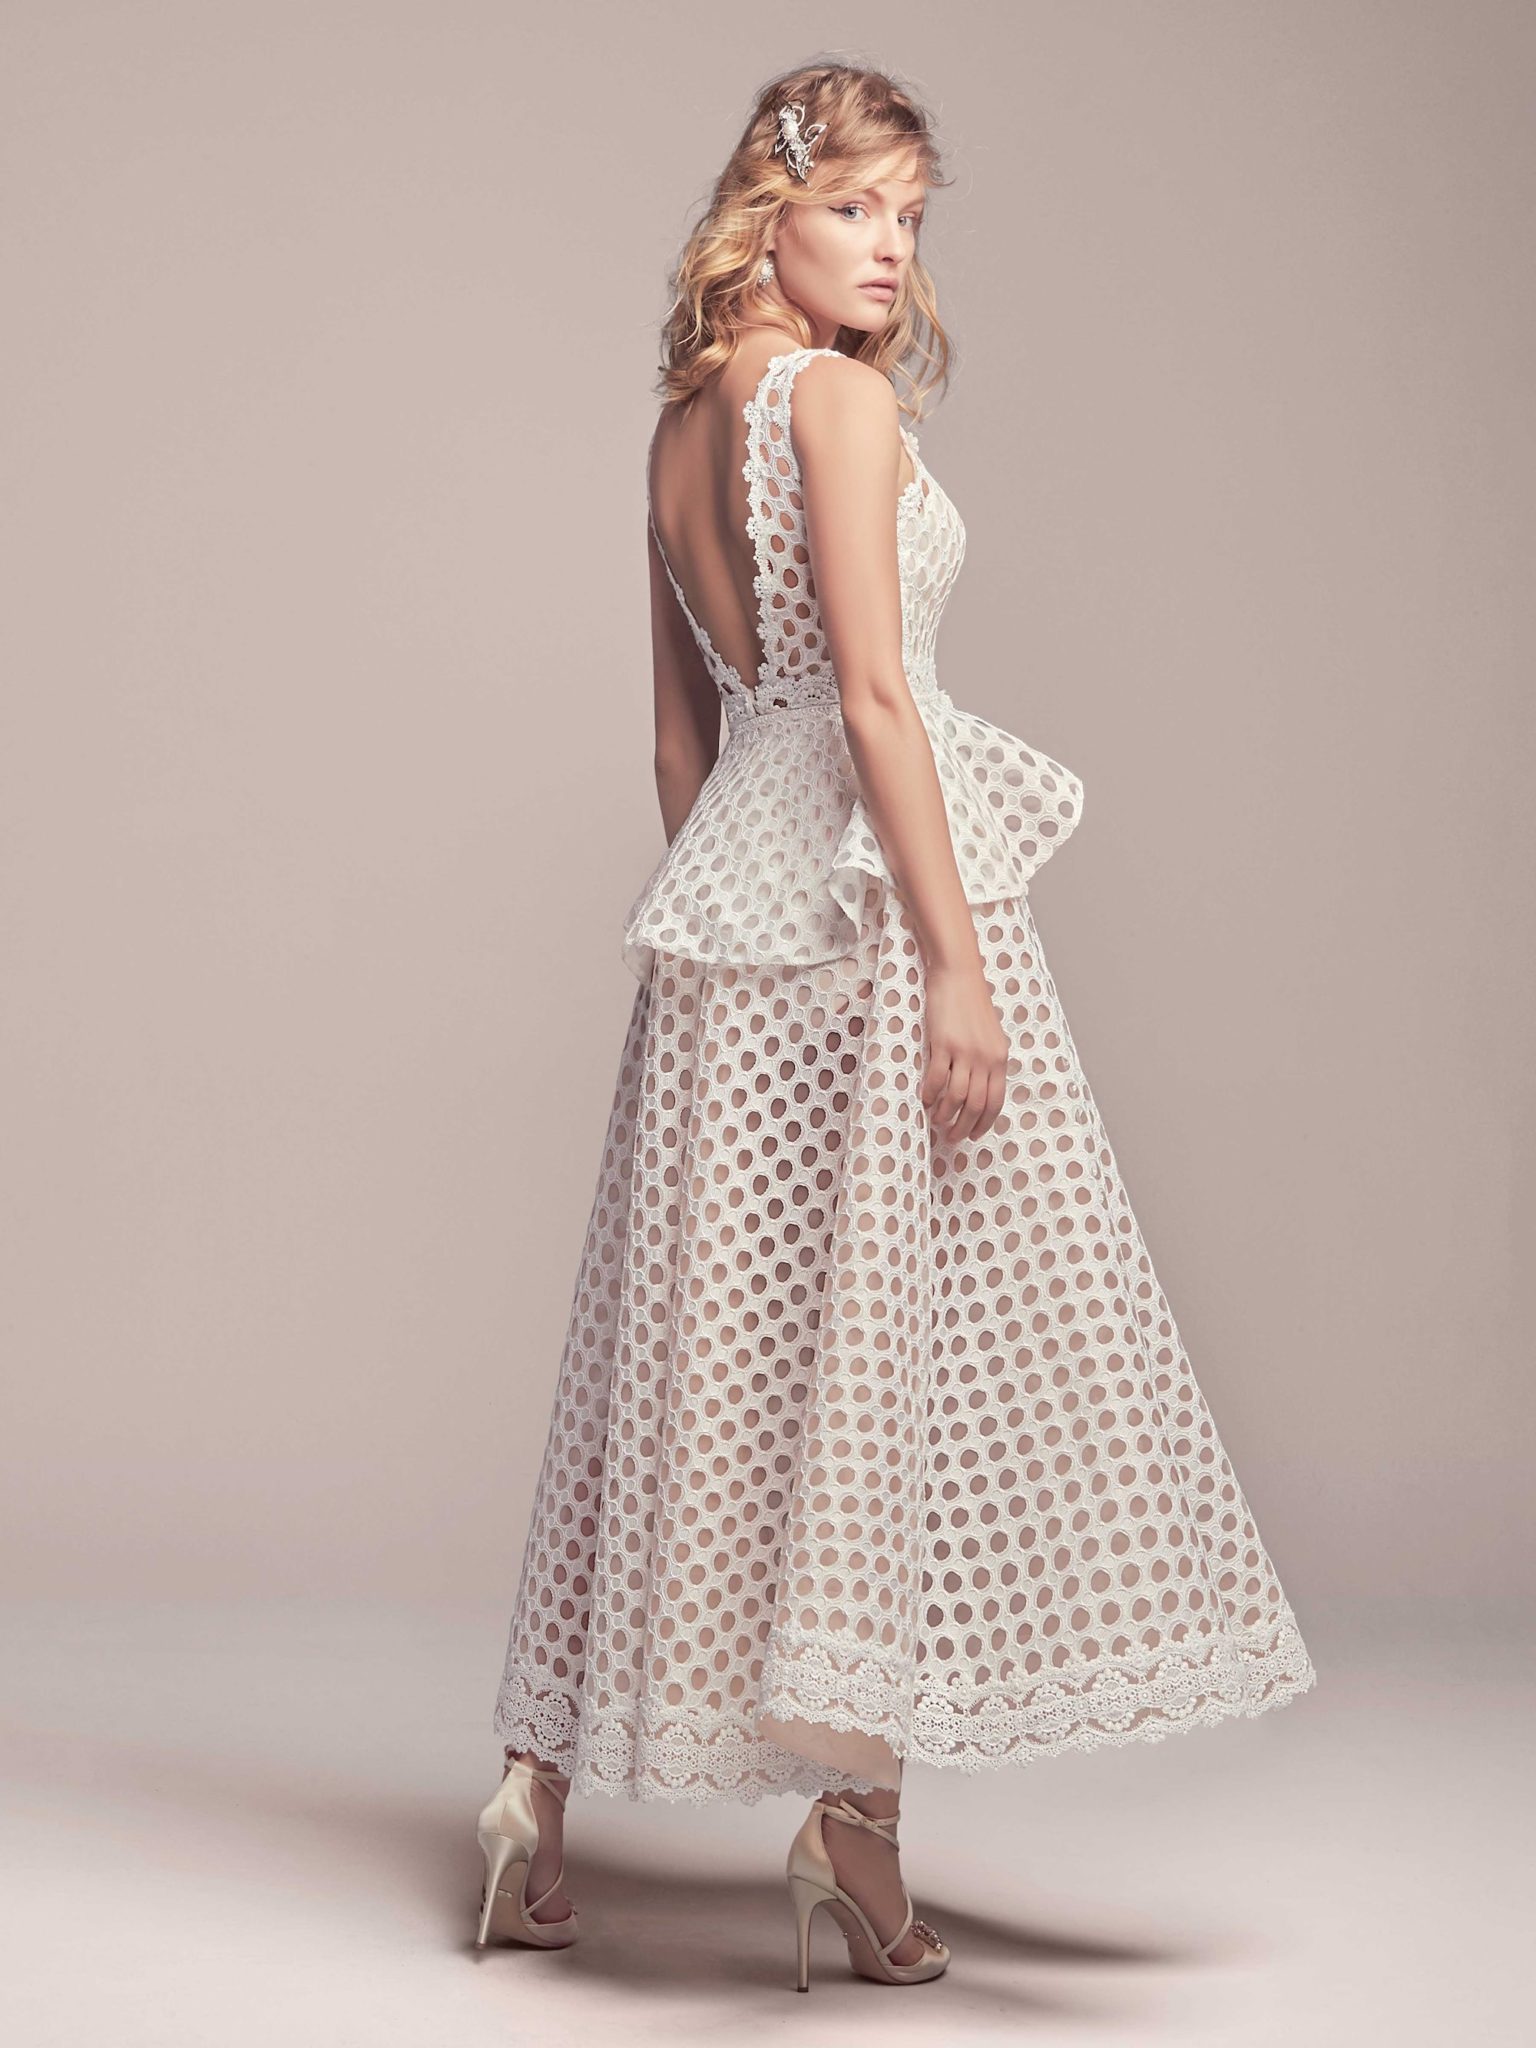 A woman wears a wedding dress with polka dots.